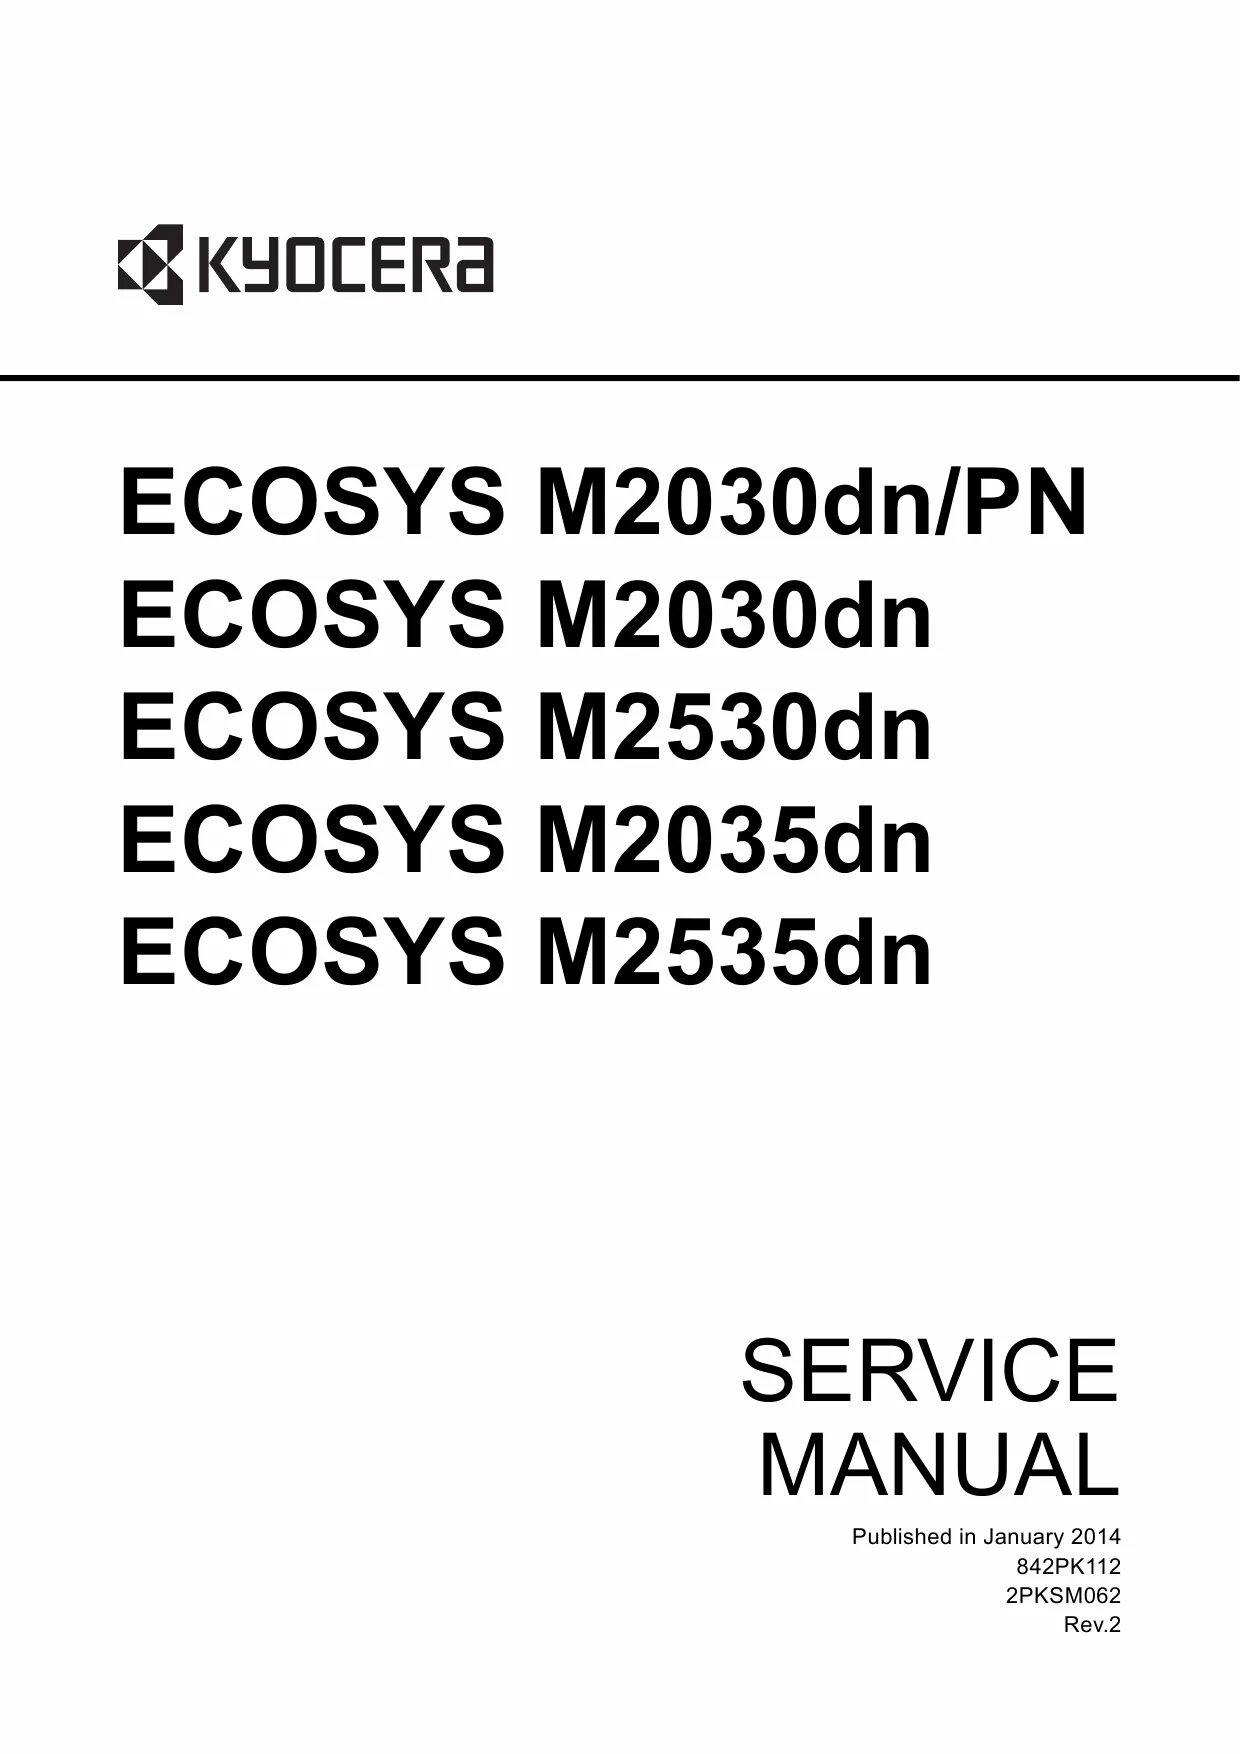 Kyocera service manual. Kyocera m2035dn service manual. 2035dn Kyocera мануал пользователя. Kyocera m3040 сервисный мануал петля. Kyocera m2030dn.